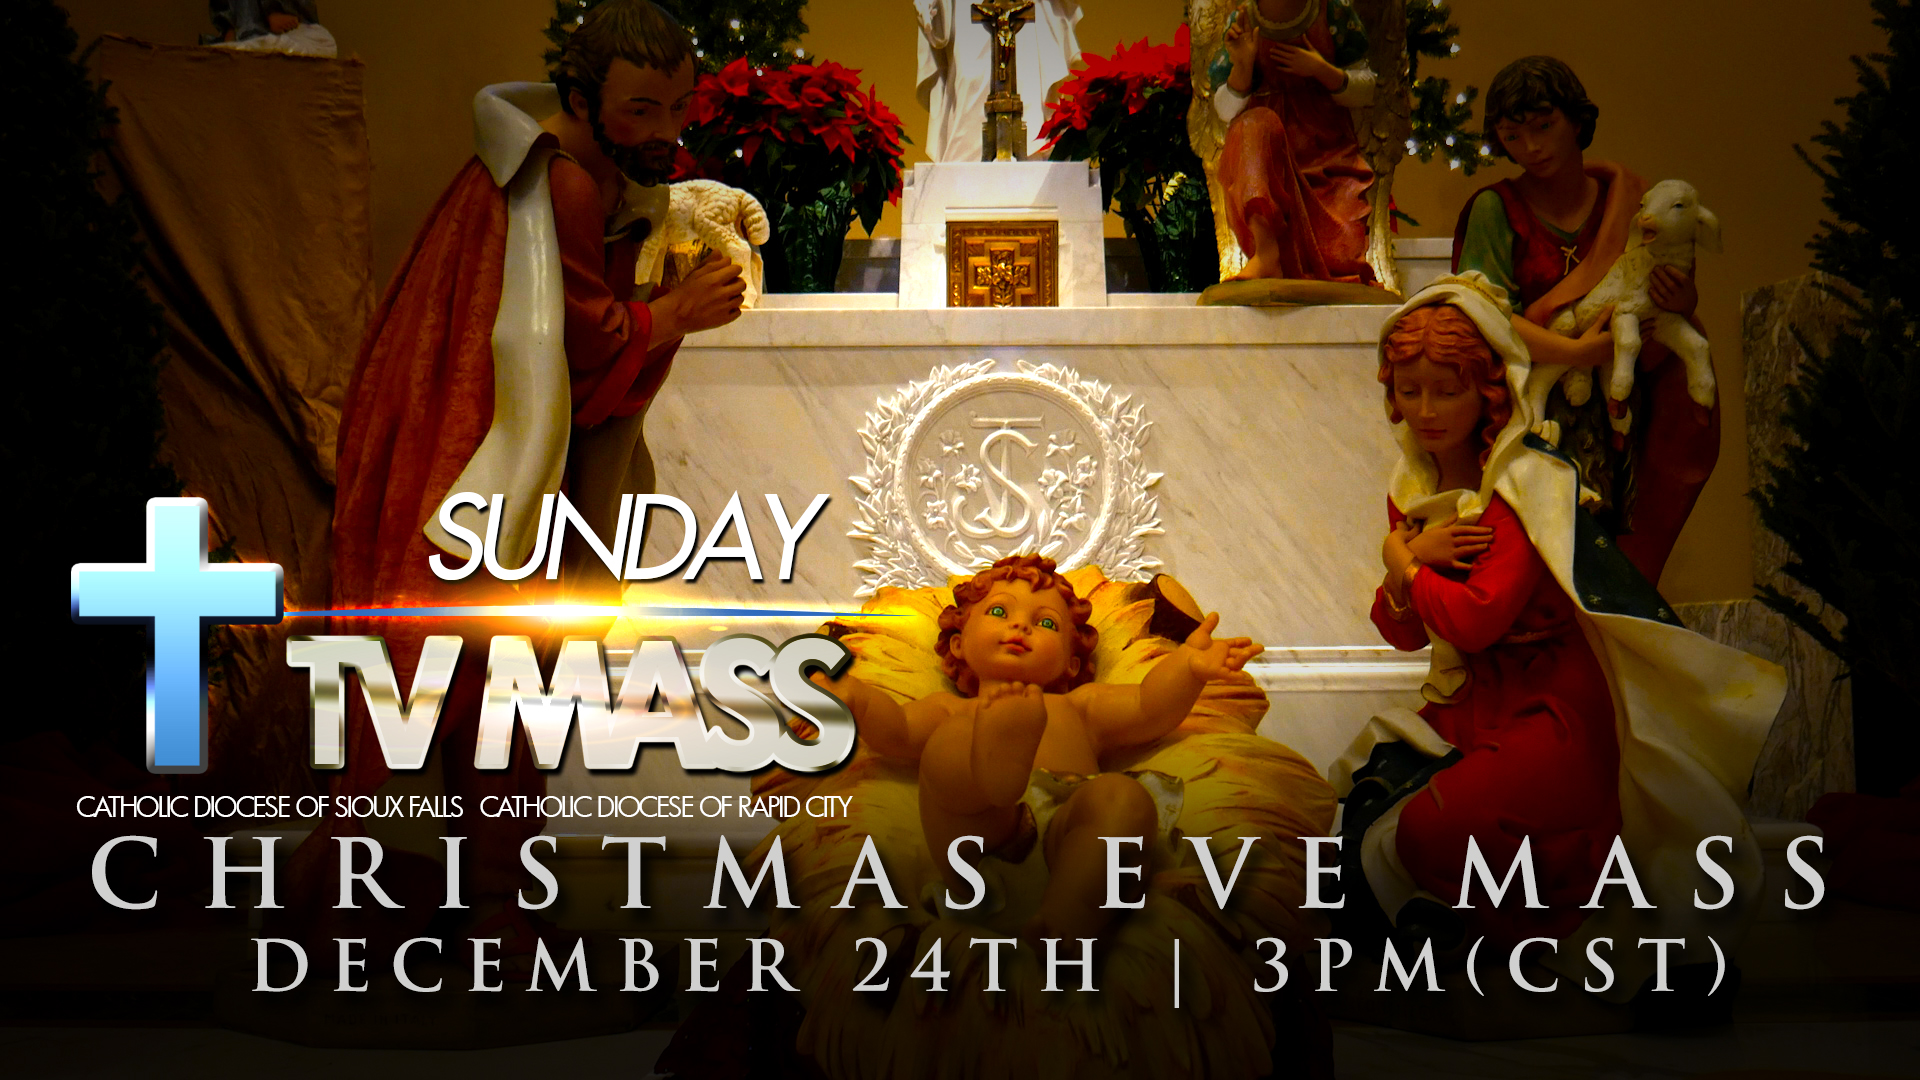 Sunday TV Mass Christmas Eve Vigil Mass Catholic Diocese of Sioux Falls